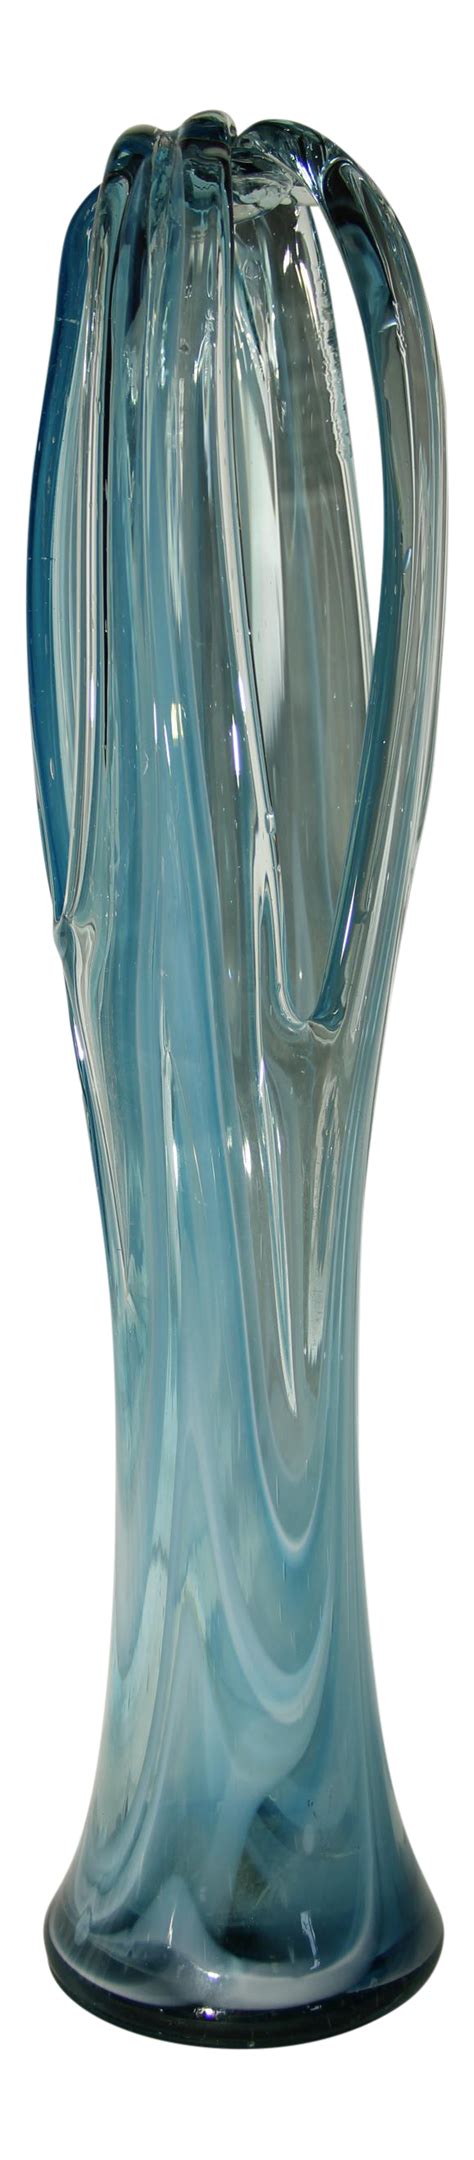 Murano Tall Blue Twist Art Glass Vase With Side Slots in 2021 | Glass art, Art glass vase, Glass ...